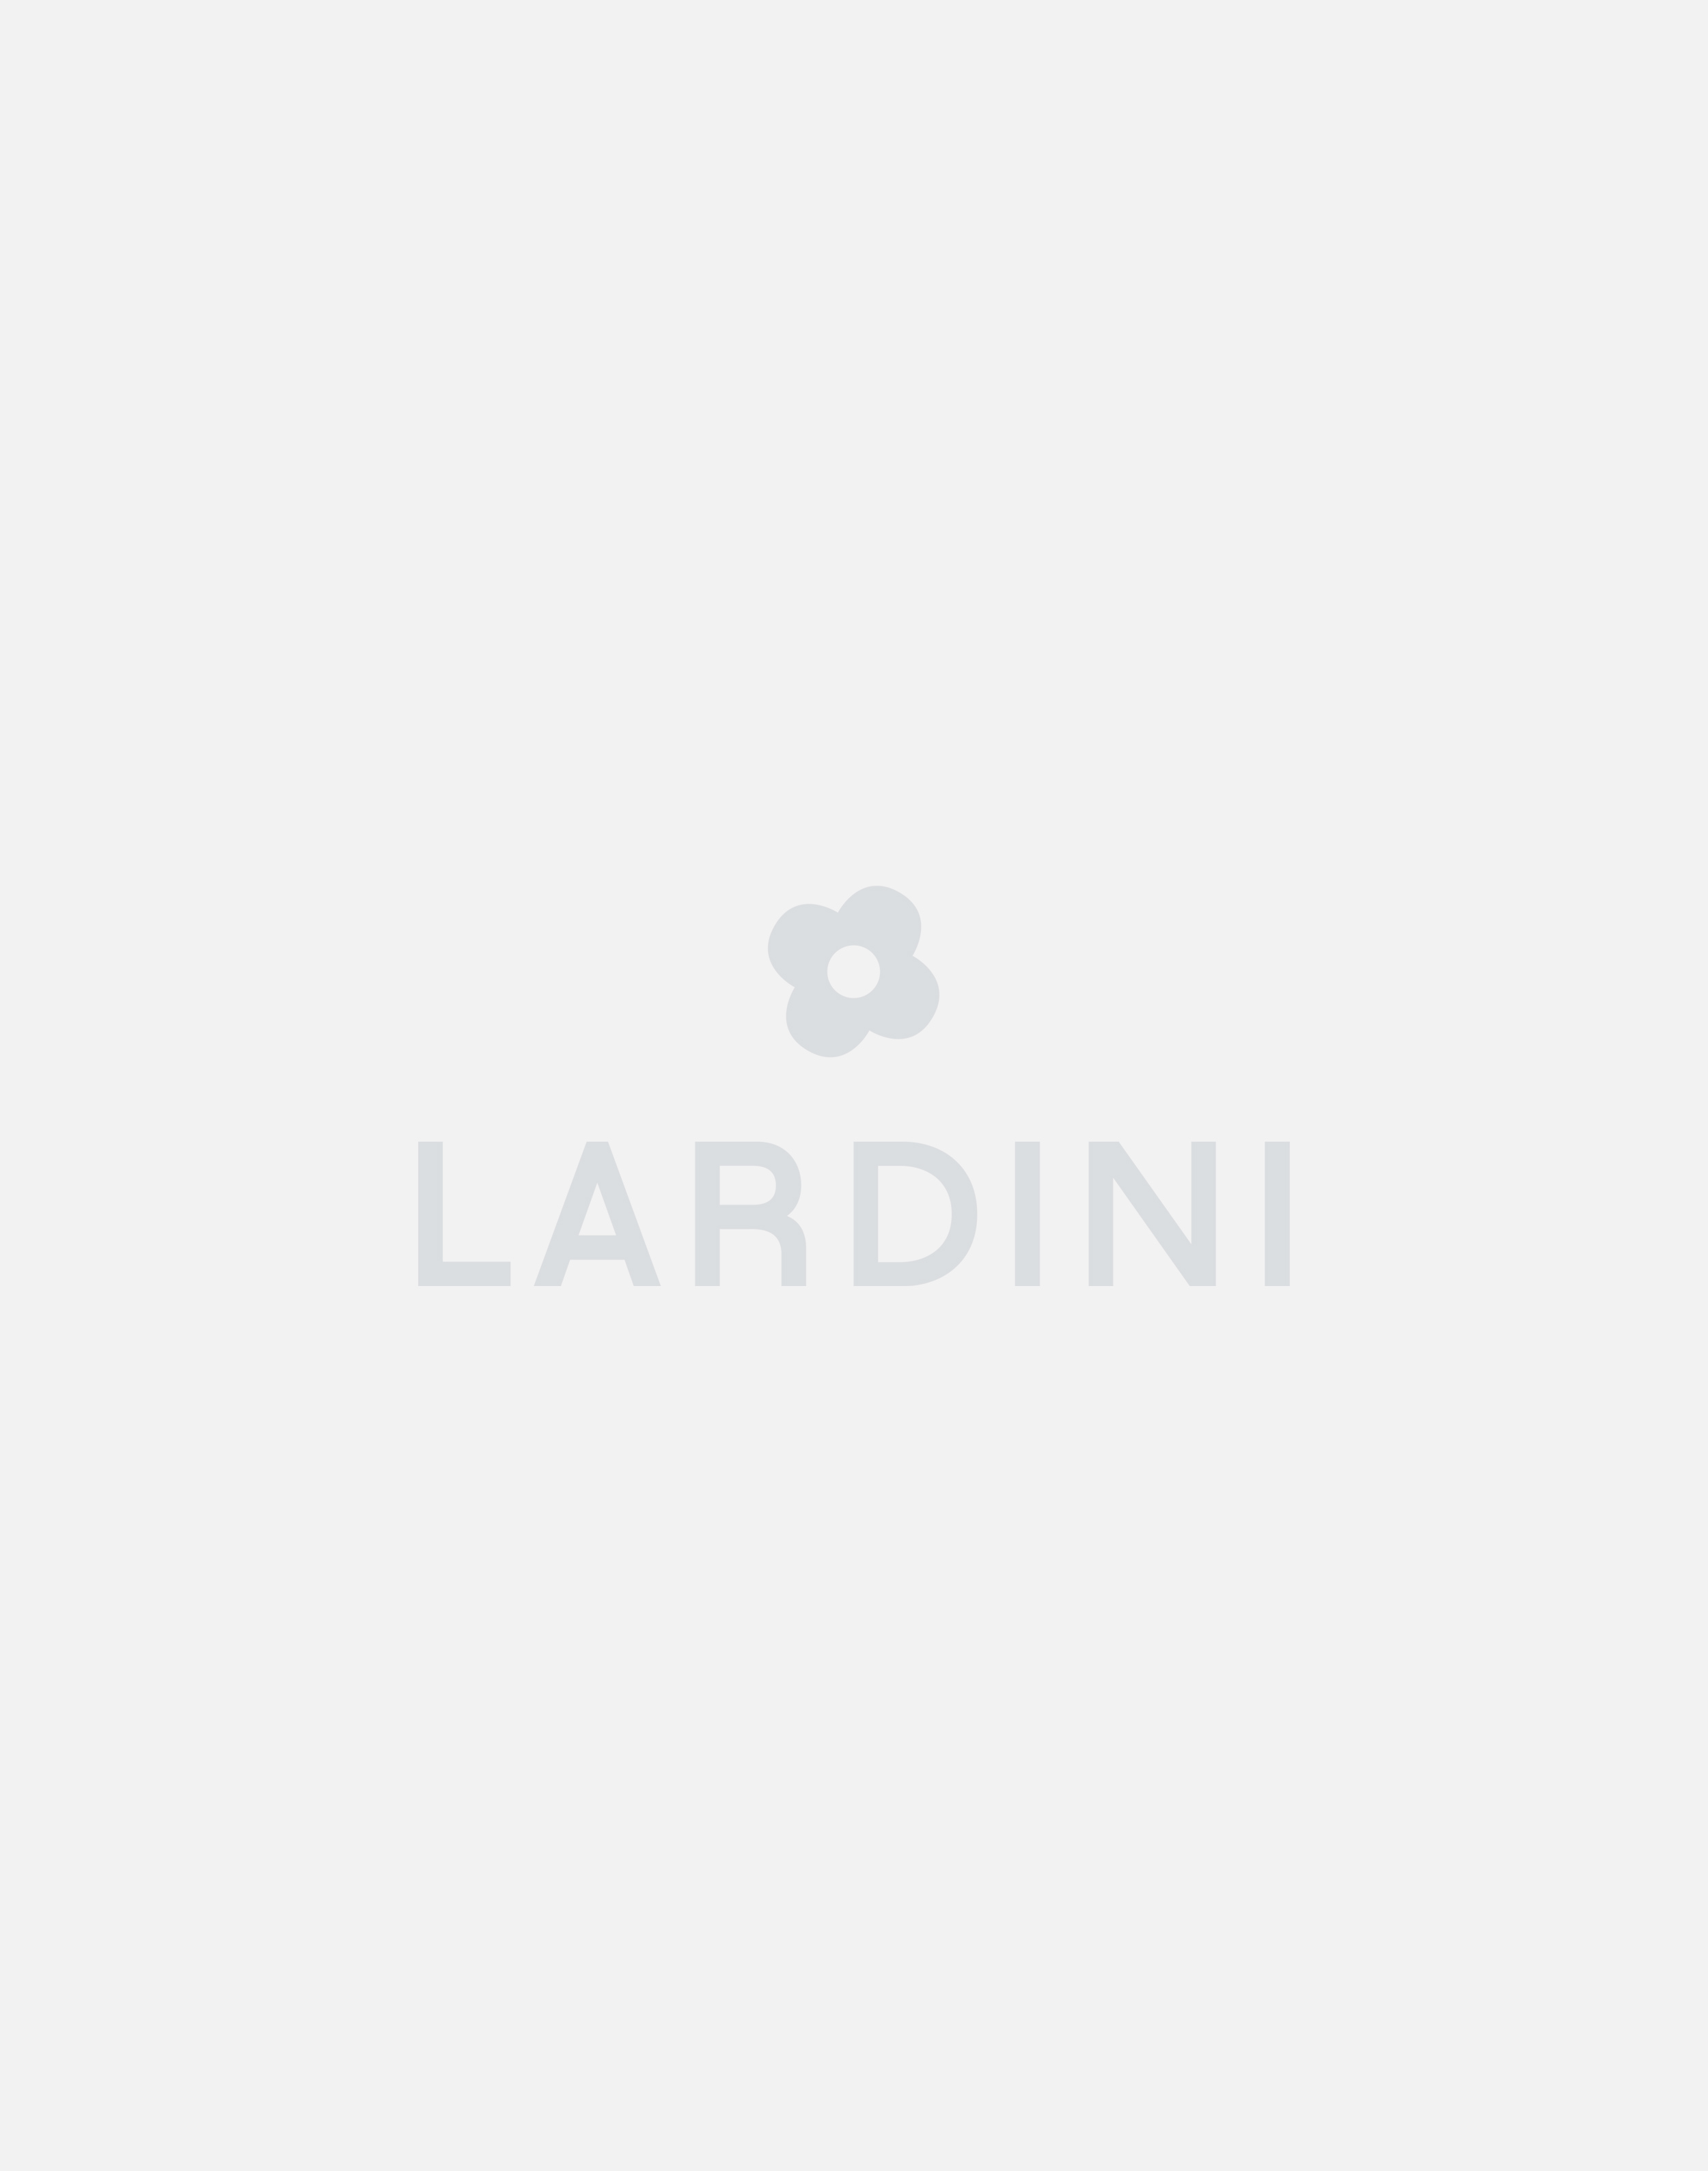 White V-neck sweater - Luigi Lardini capsule 2